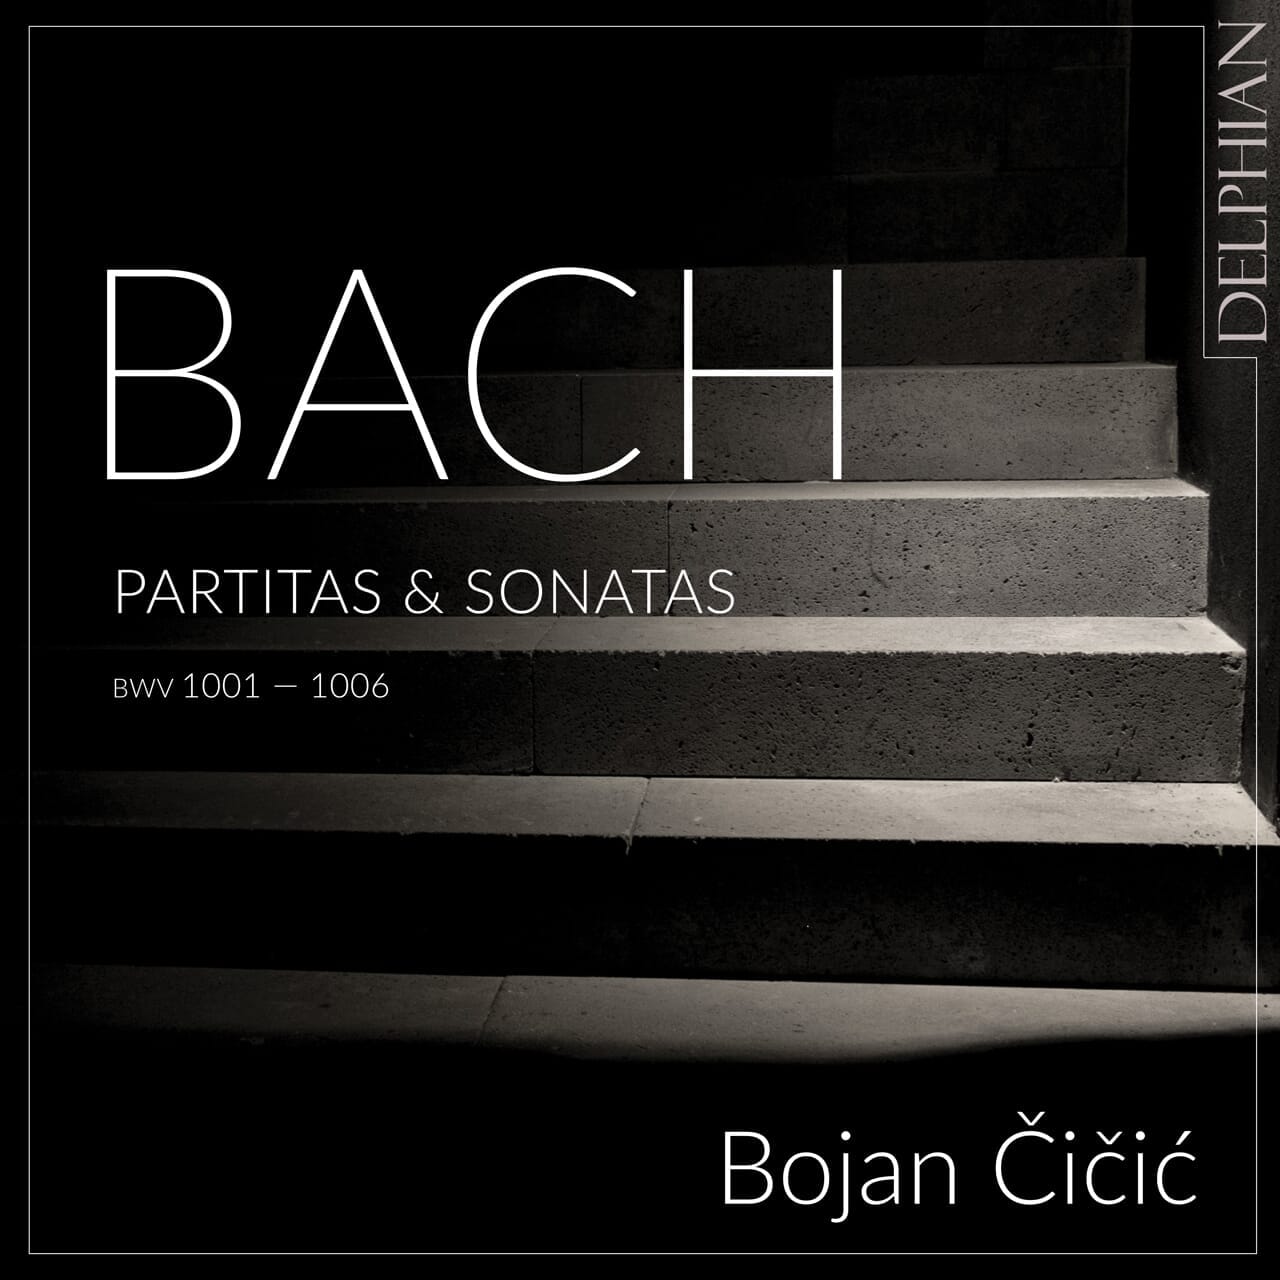 BACH: Partitas & Sonatas BWV 1001 - 1006